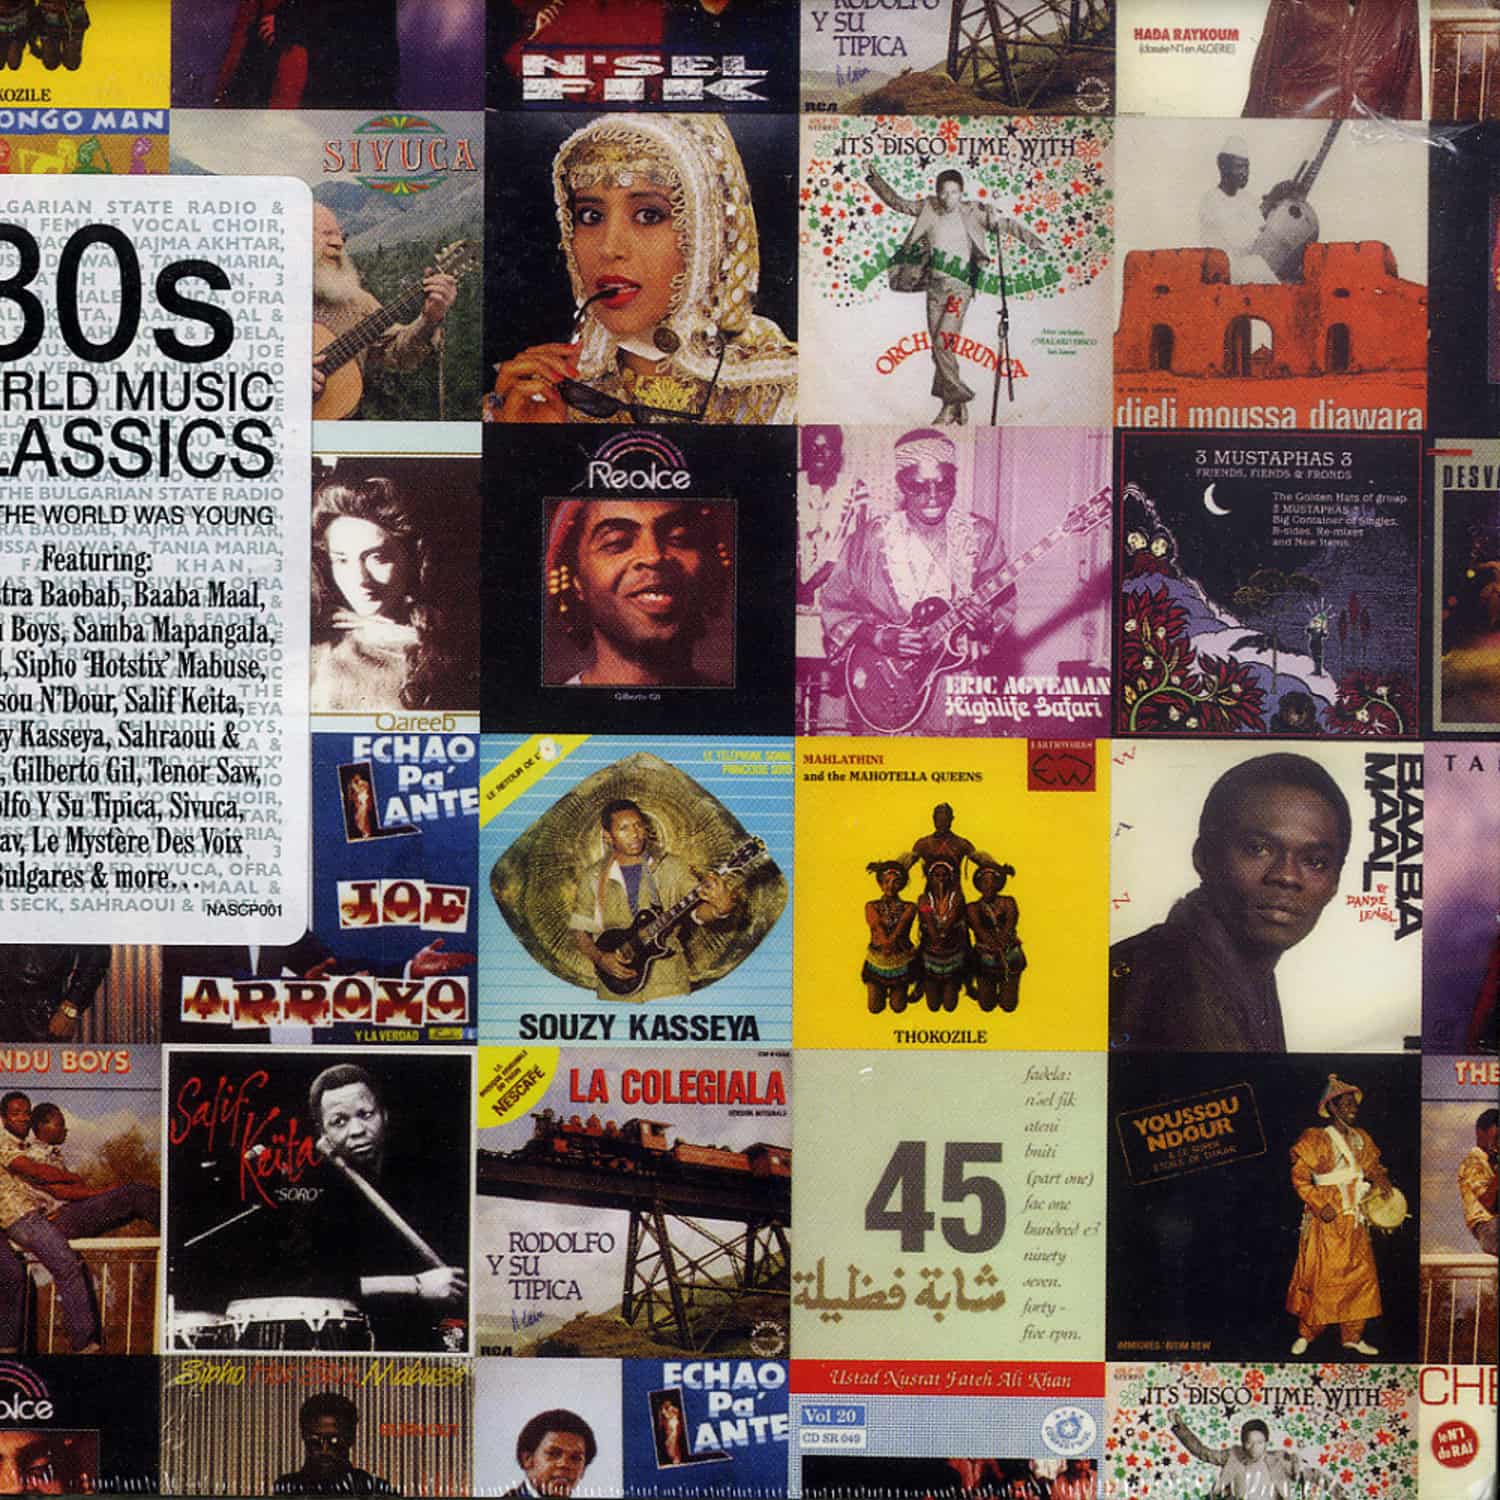 Various Artists - 80 S WORLD MUSIC CLASSICS 